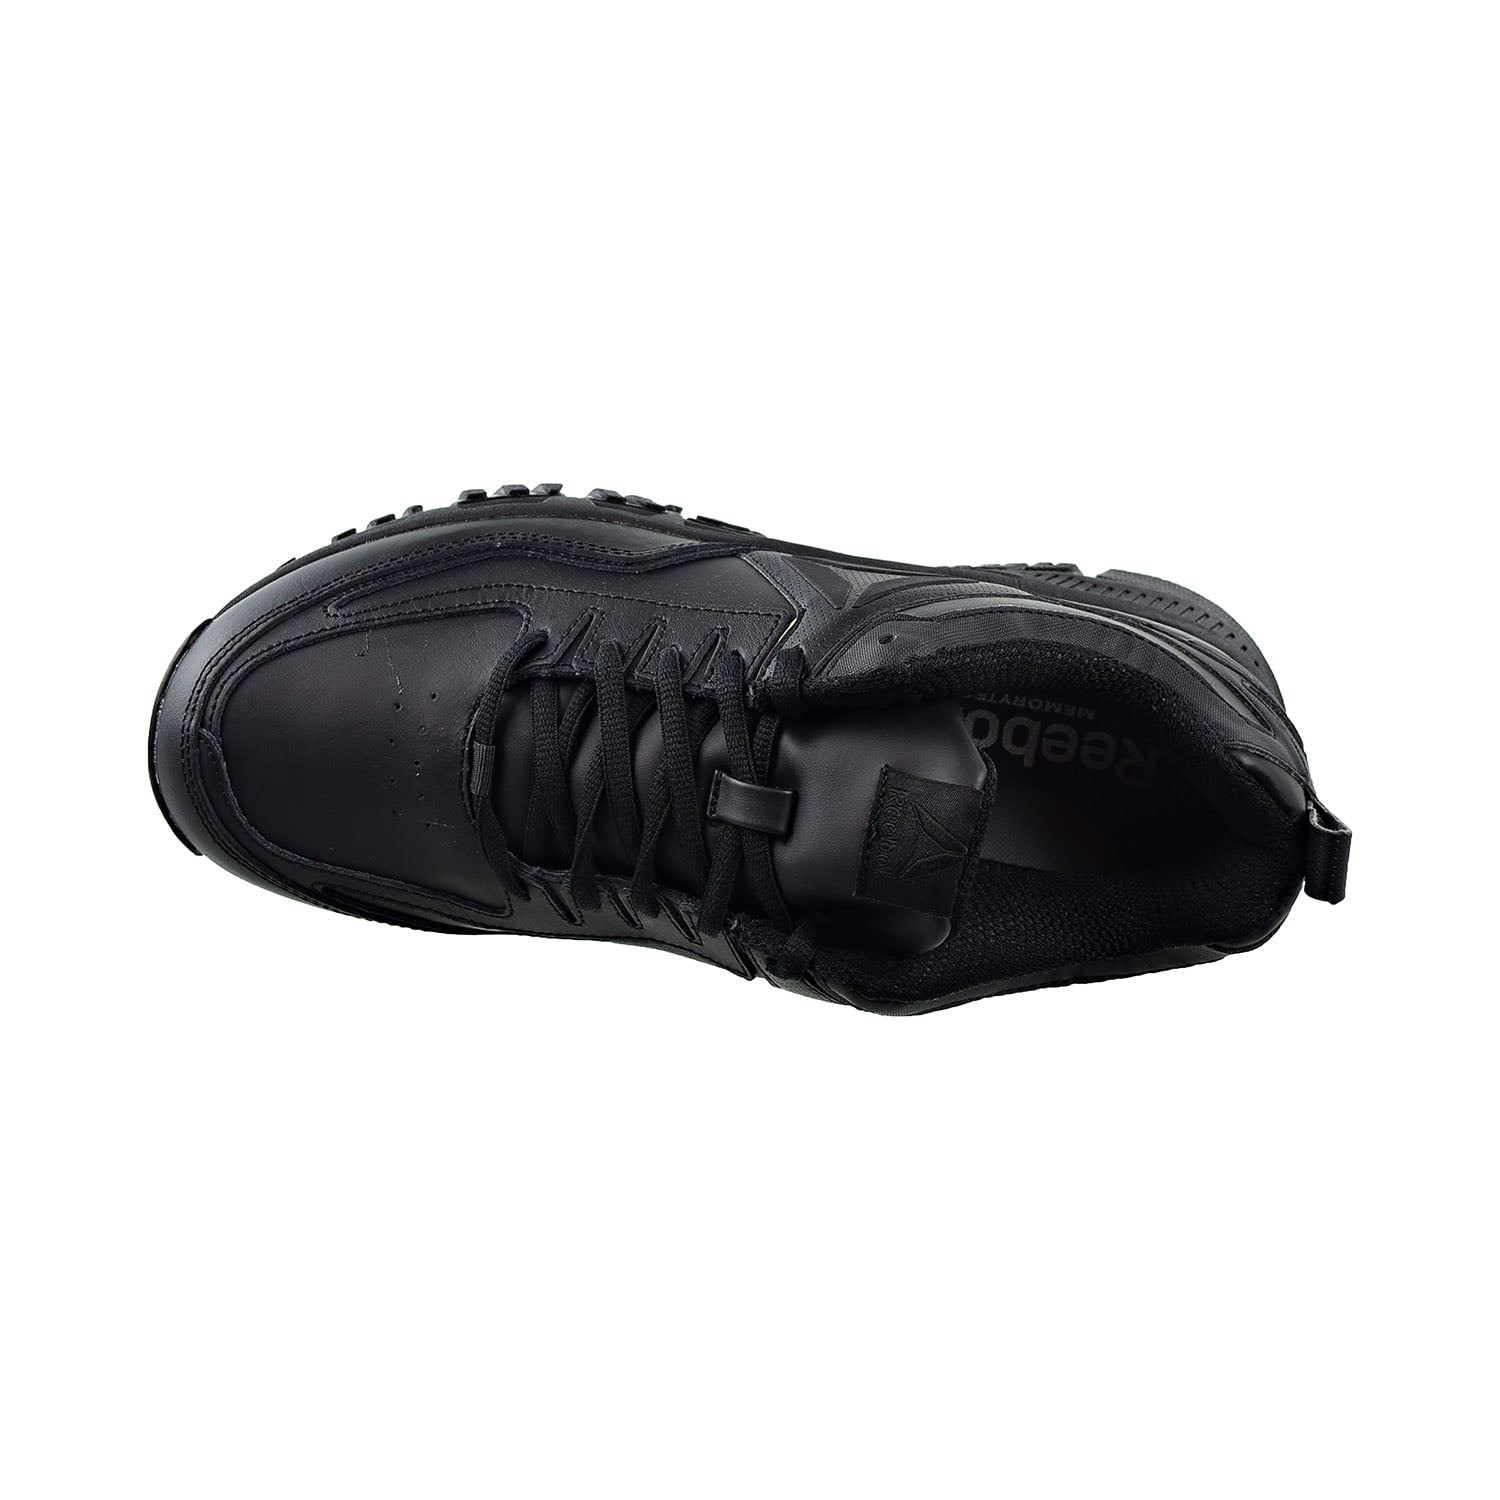 Reebok Ridgerider Leather (Extra Wide 4E) Men's Shoes Black, 54% OFF